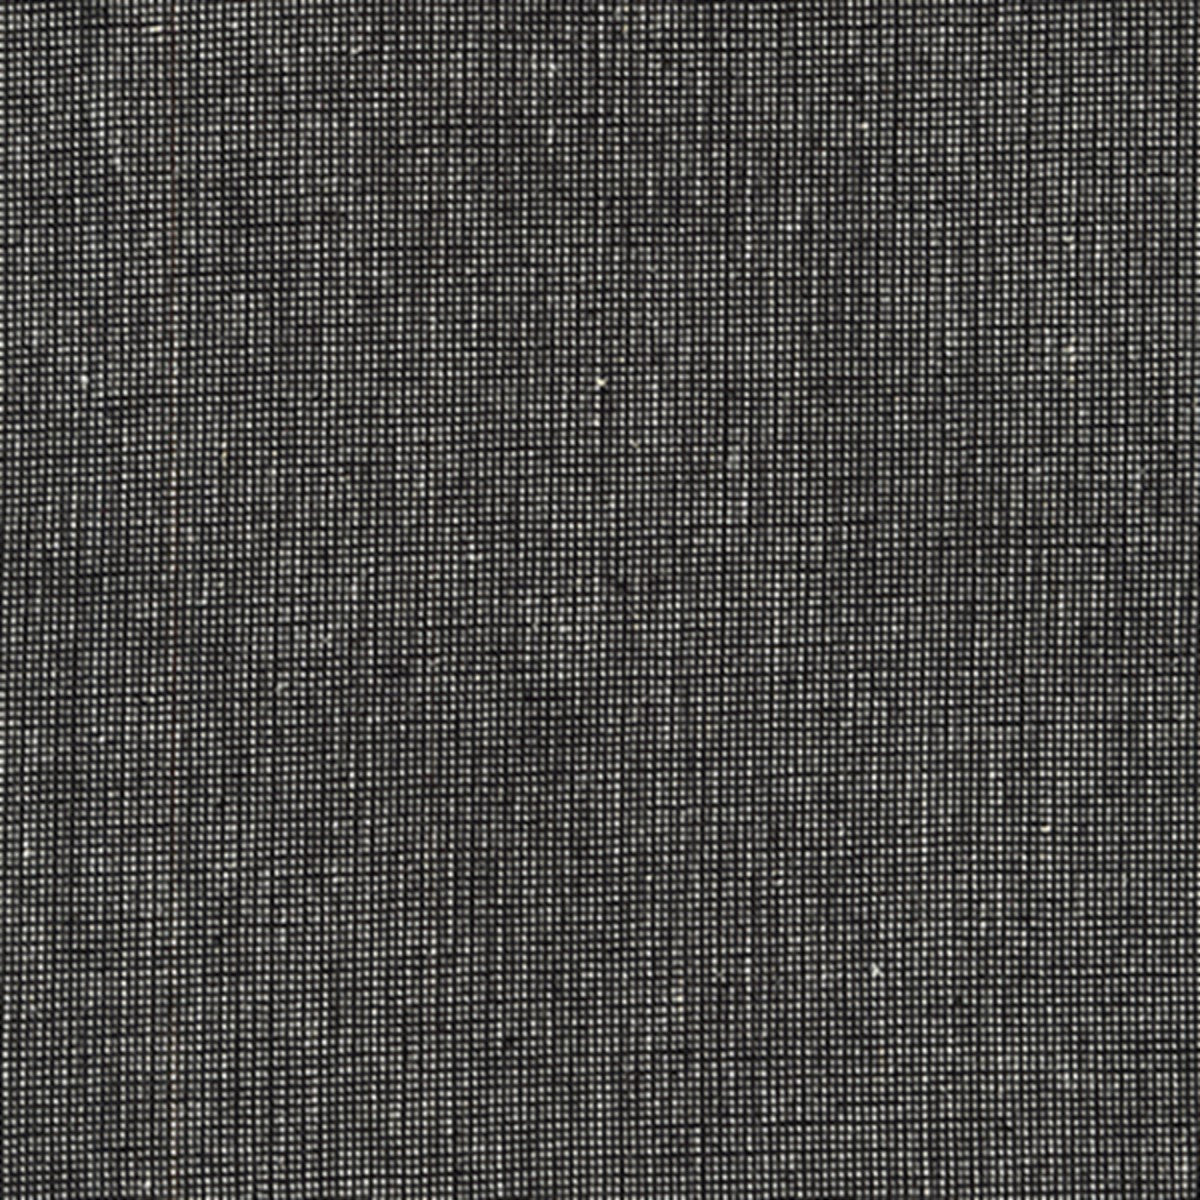 Essex Yarn Dyed - Pepper Homespun - 55/45 Linen/Cotton - homesewn